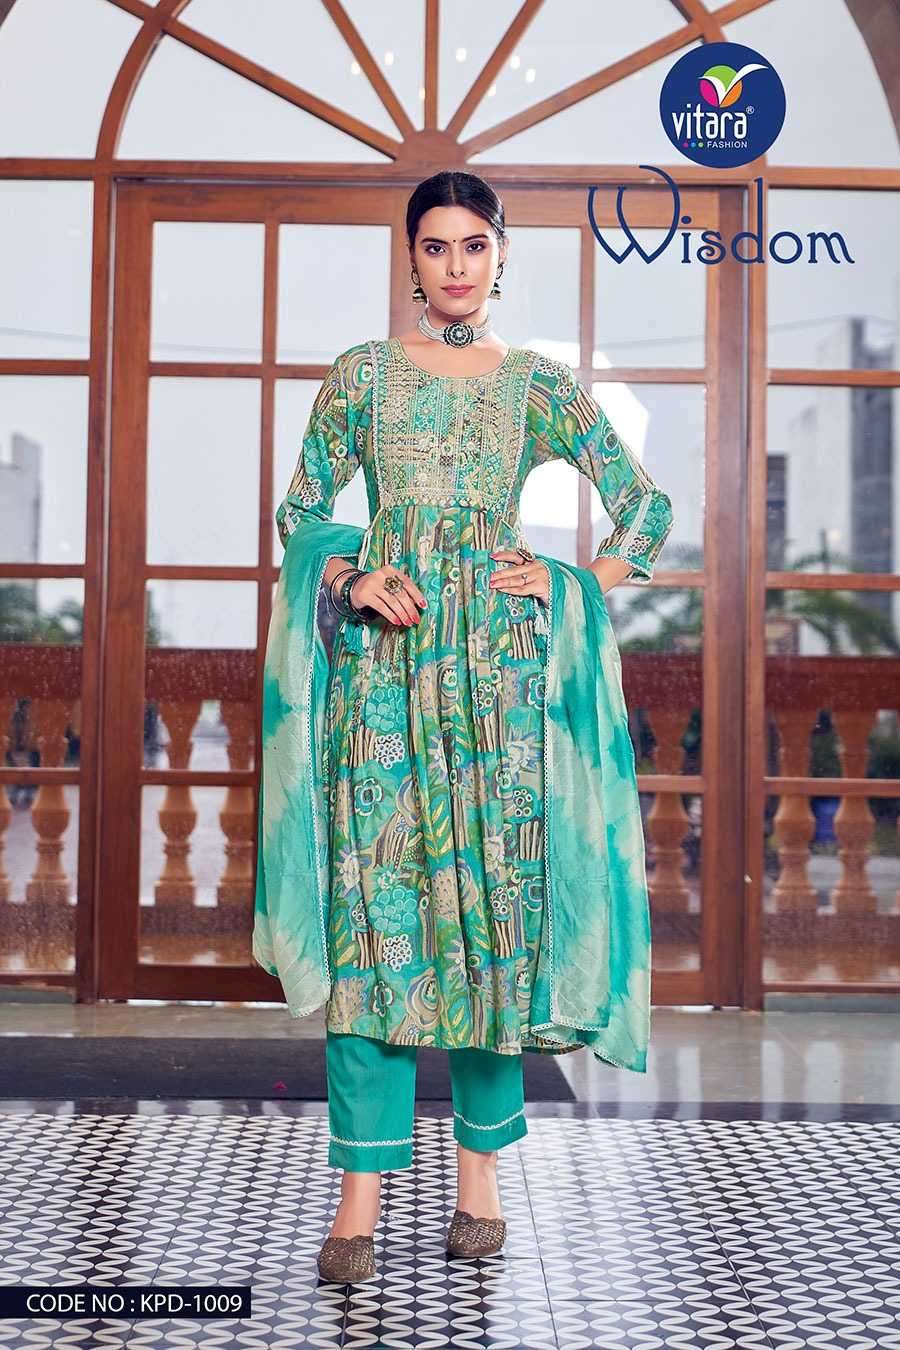 vitara fashion wisdom series 1001-1016 heavy rayon suit 